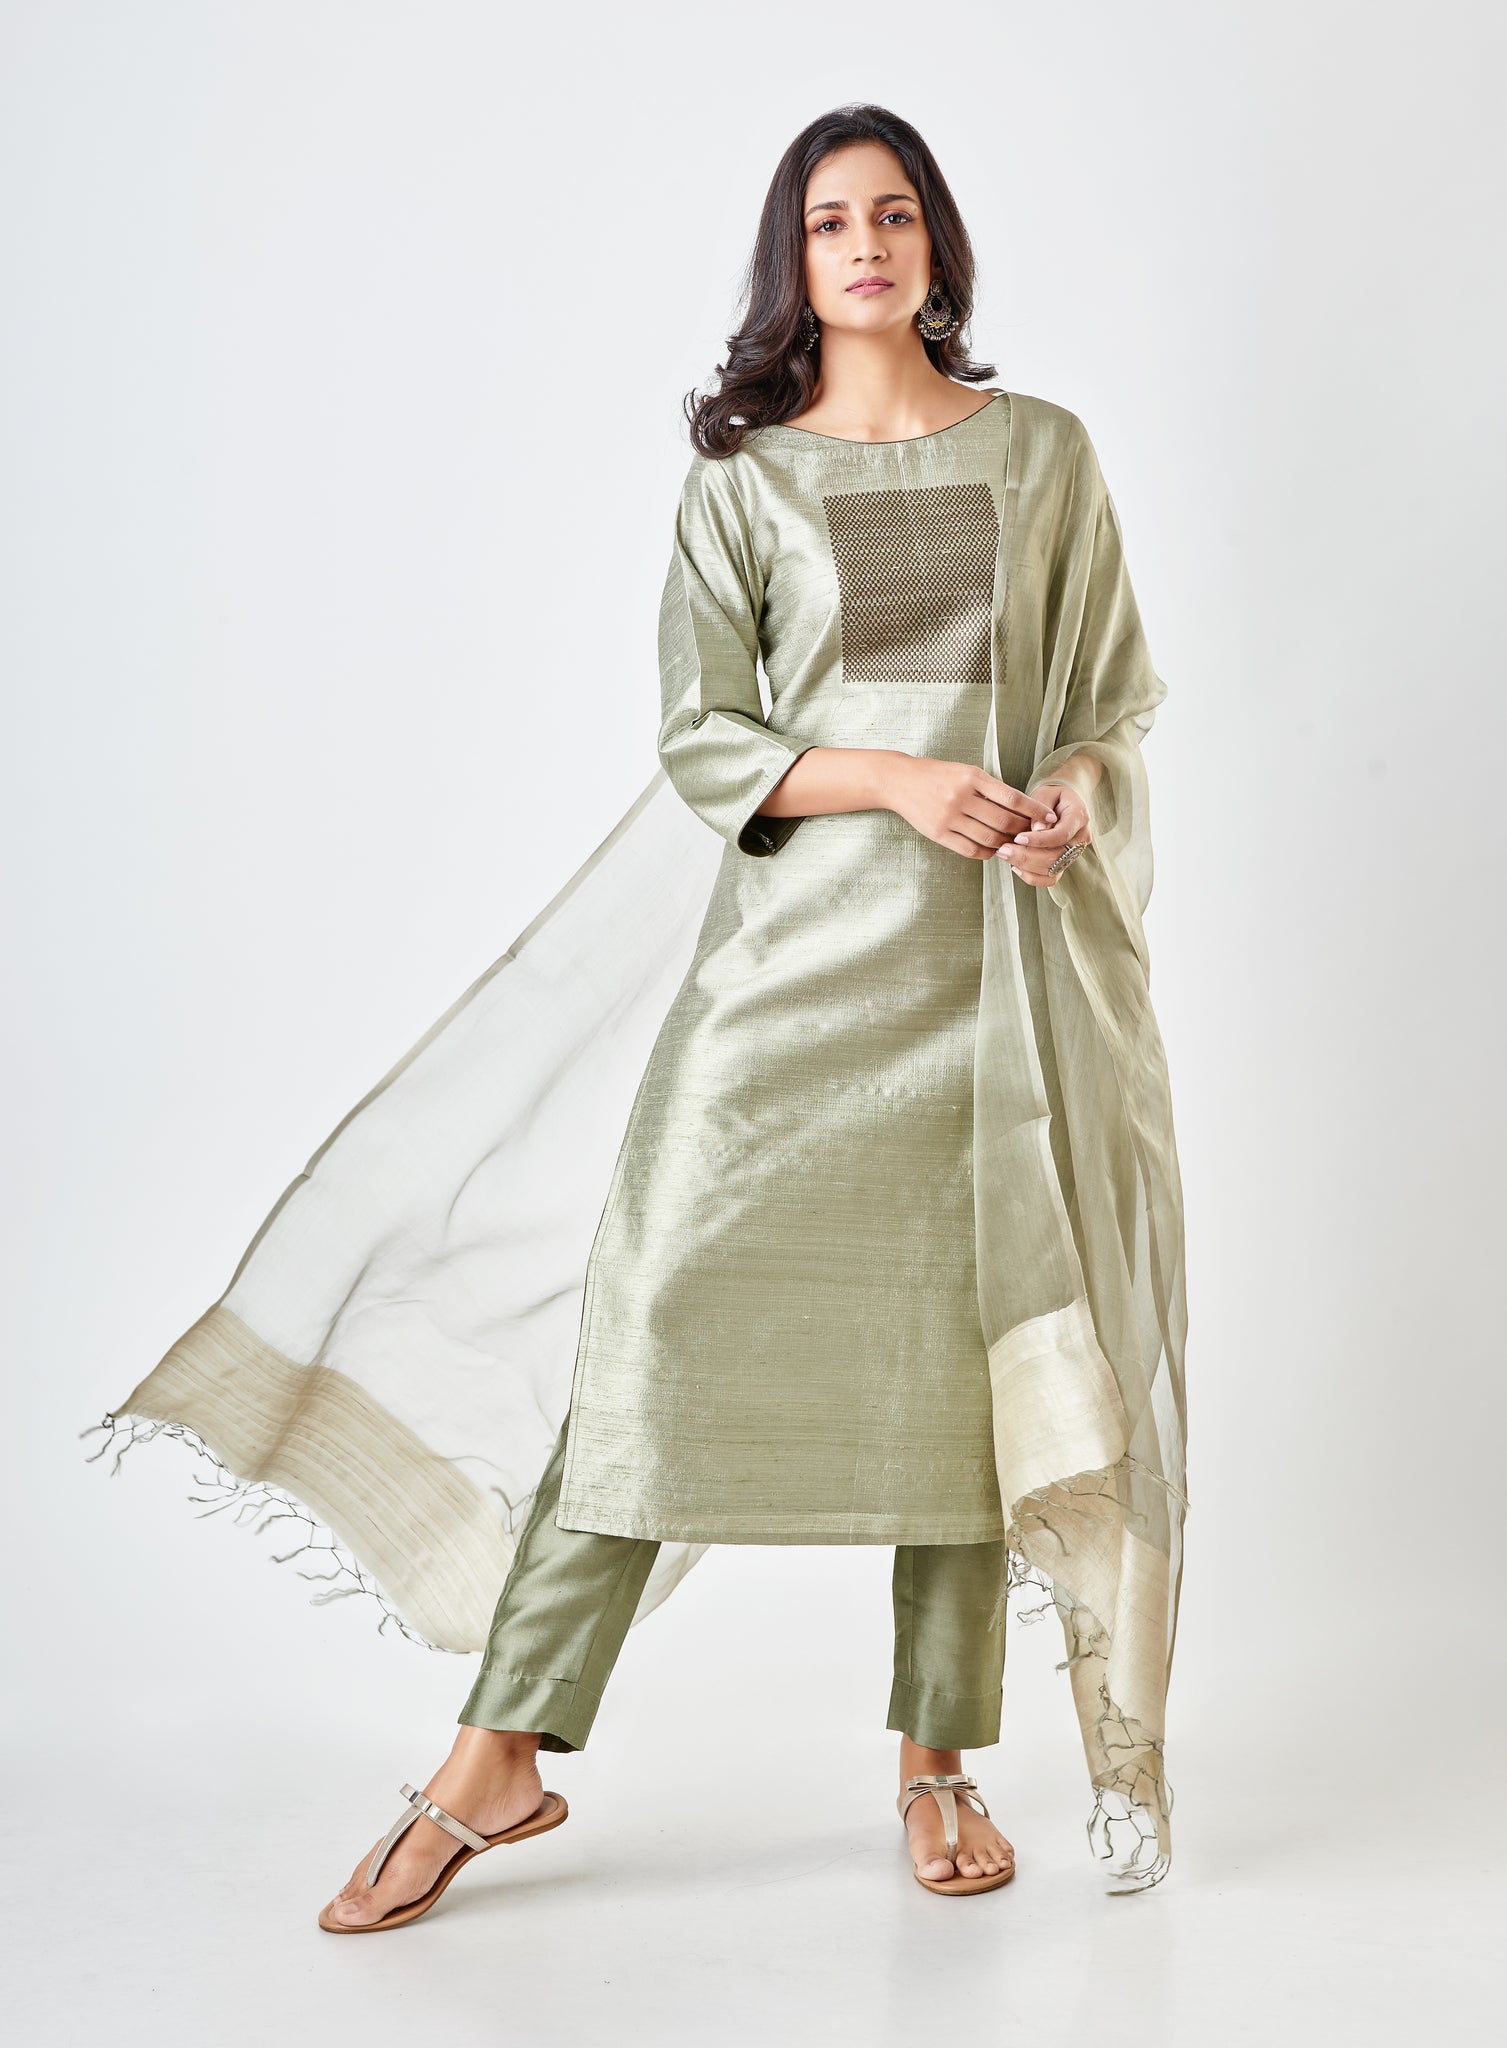 Ladies Green Silk Kurti Pant Set, Hand Wash at Rs 922/set in New Delhi |  ID: 23932463173